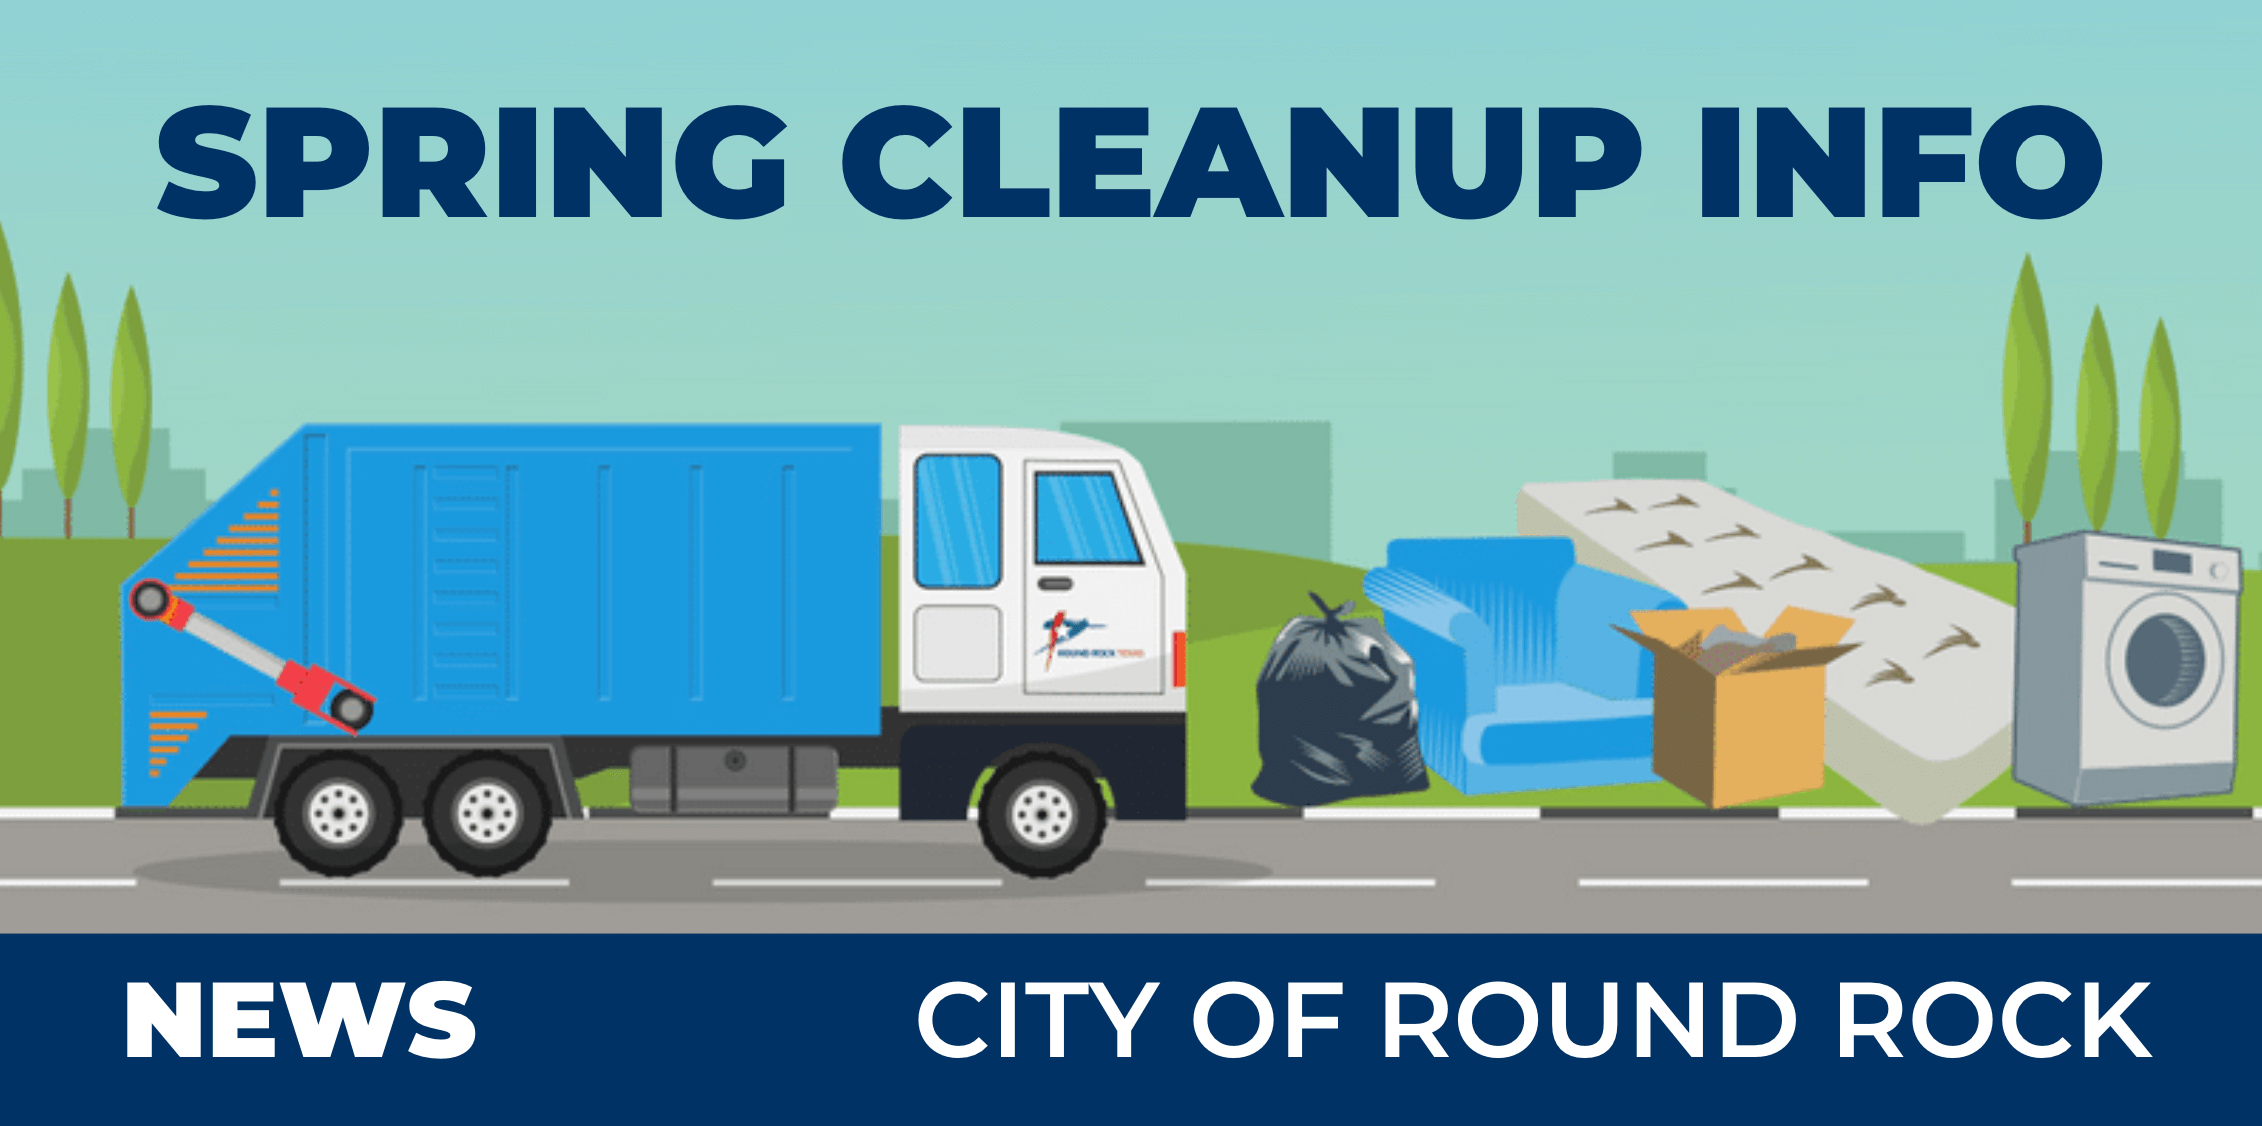 Spring CleanUp bulk item pickup begins June 4 City of Round Rock